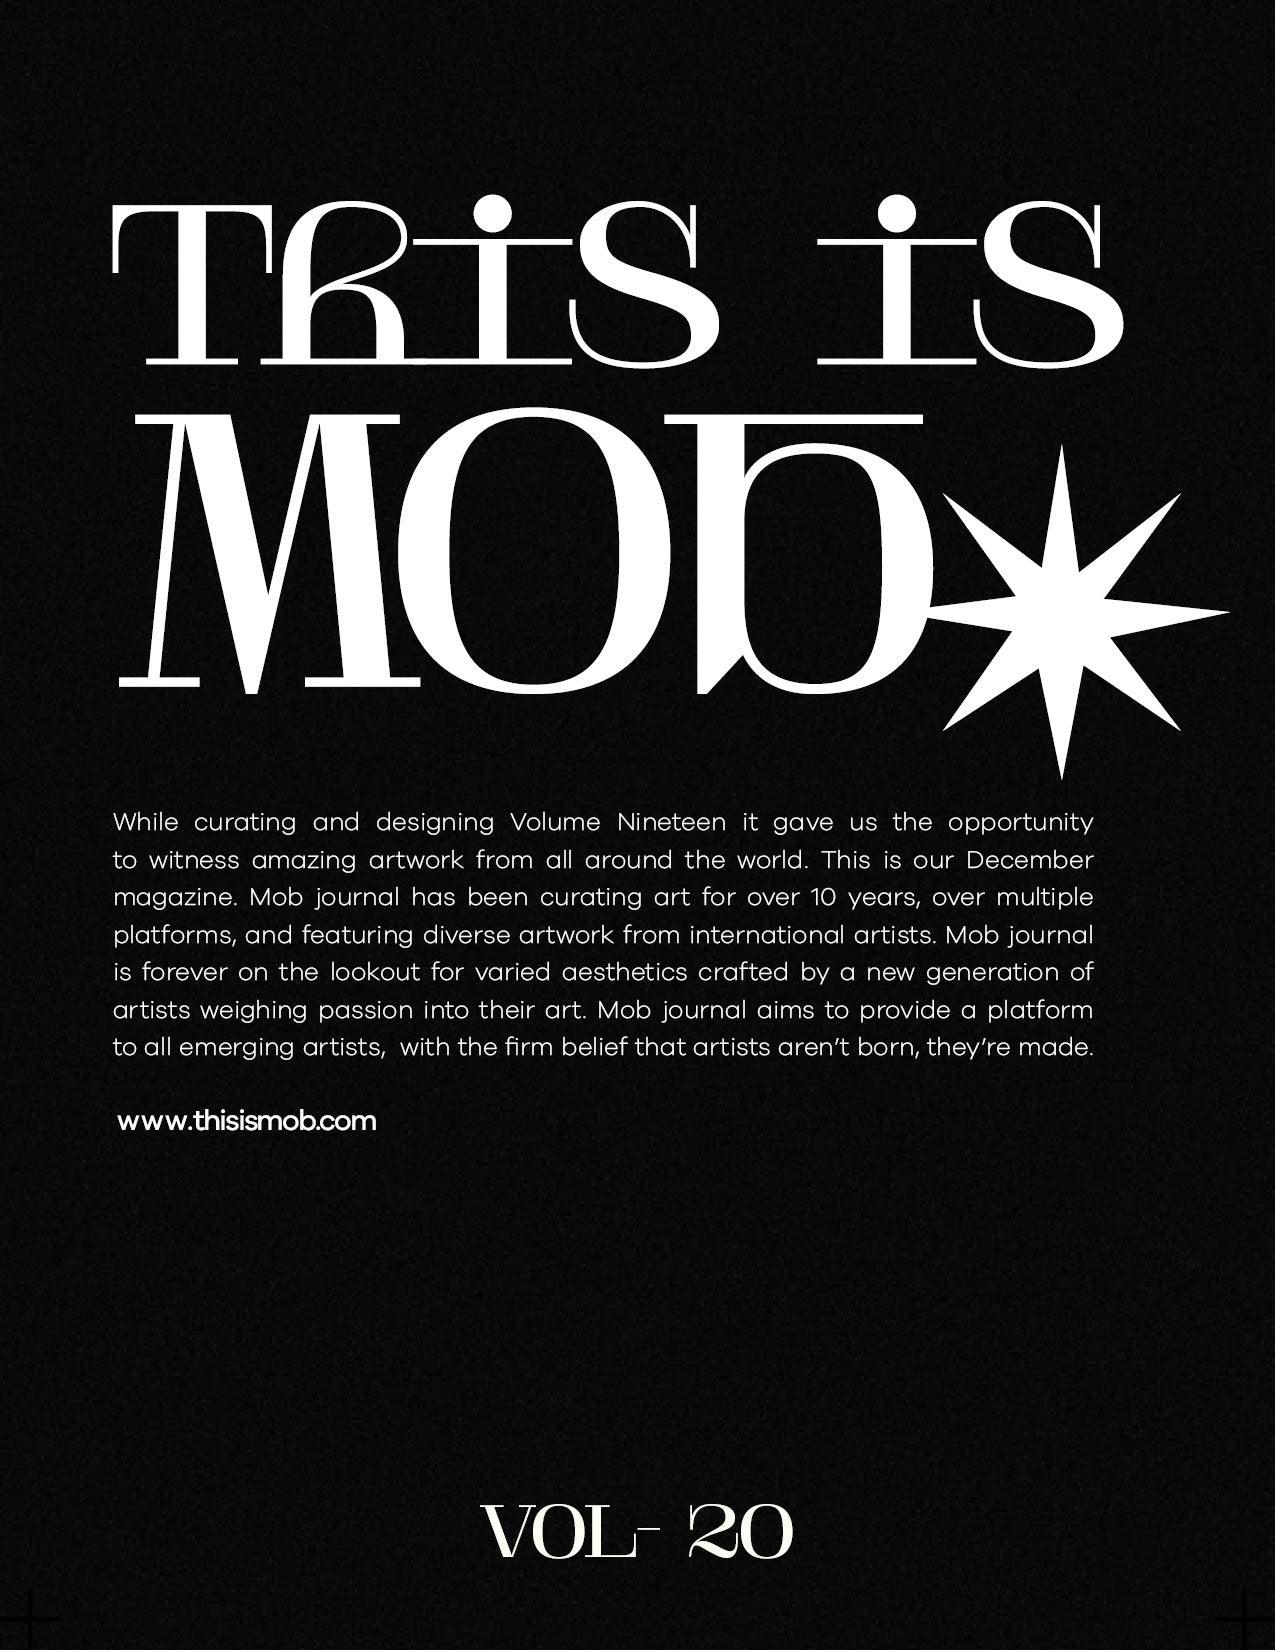 MOB JOURNAL | VOLUME TWENTY | ISSUE #07 - Mob Journal